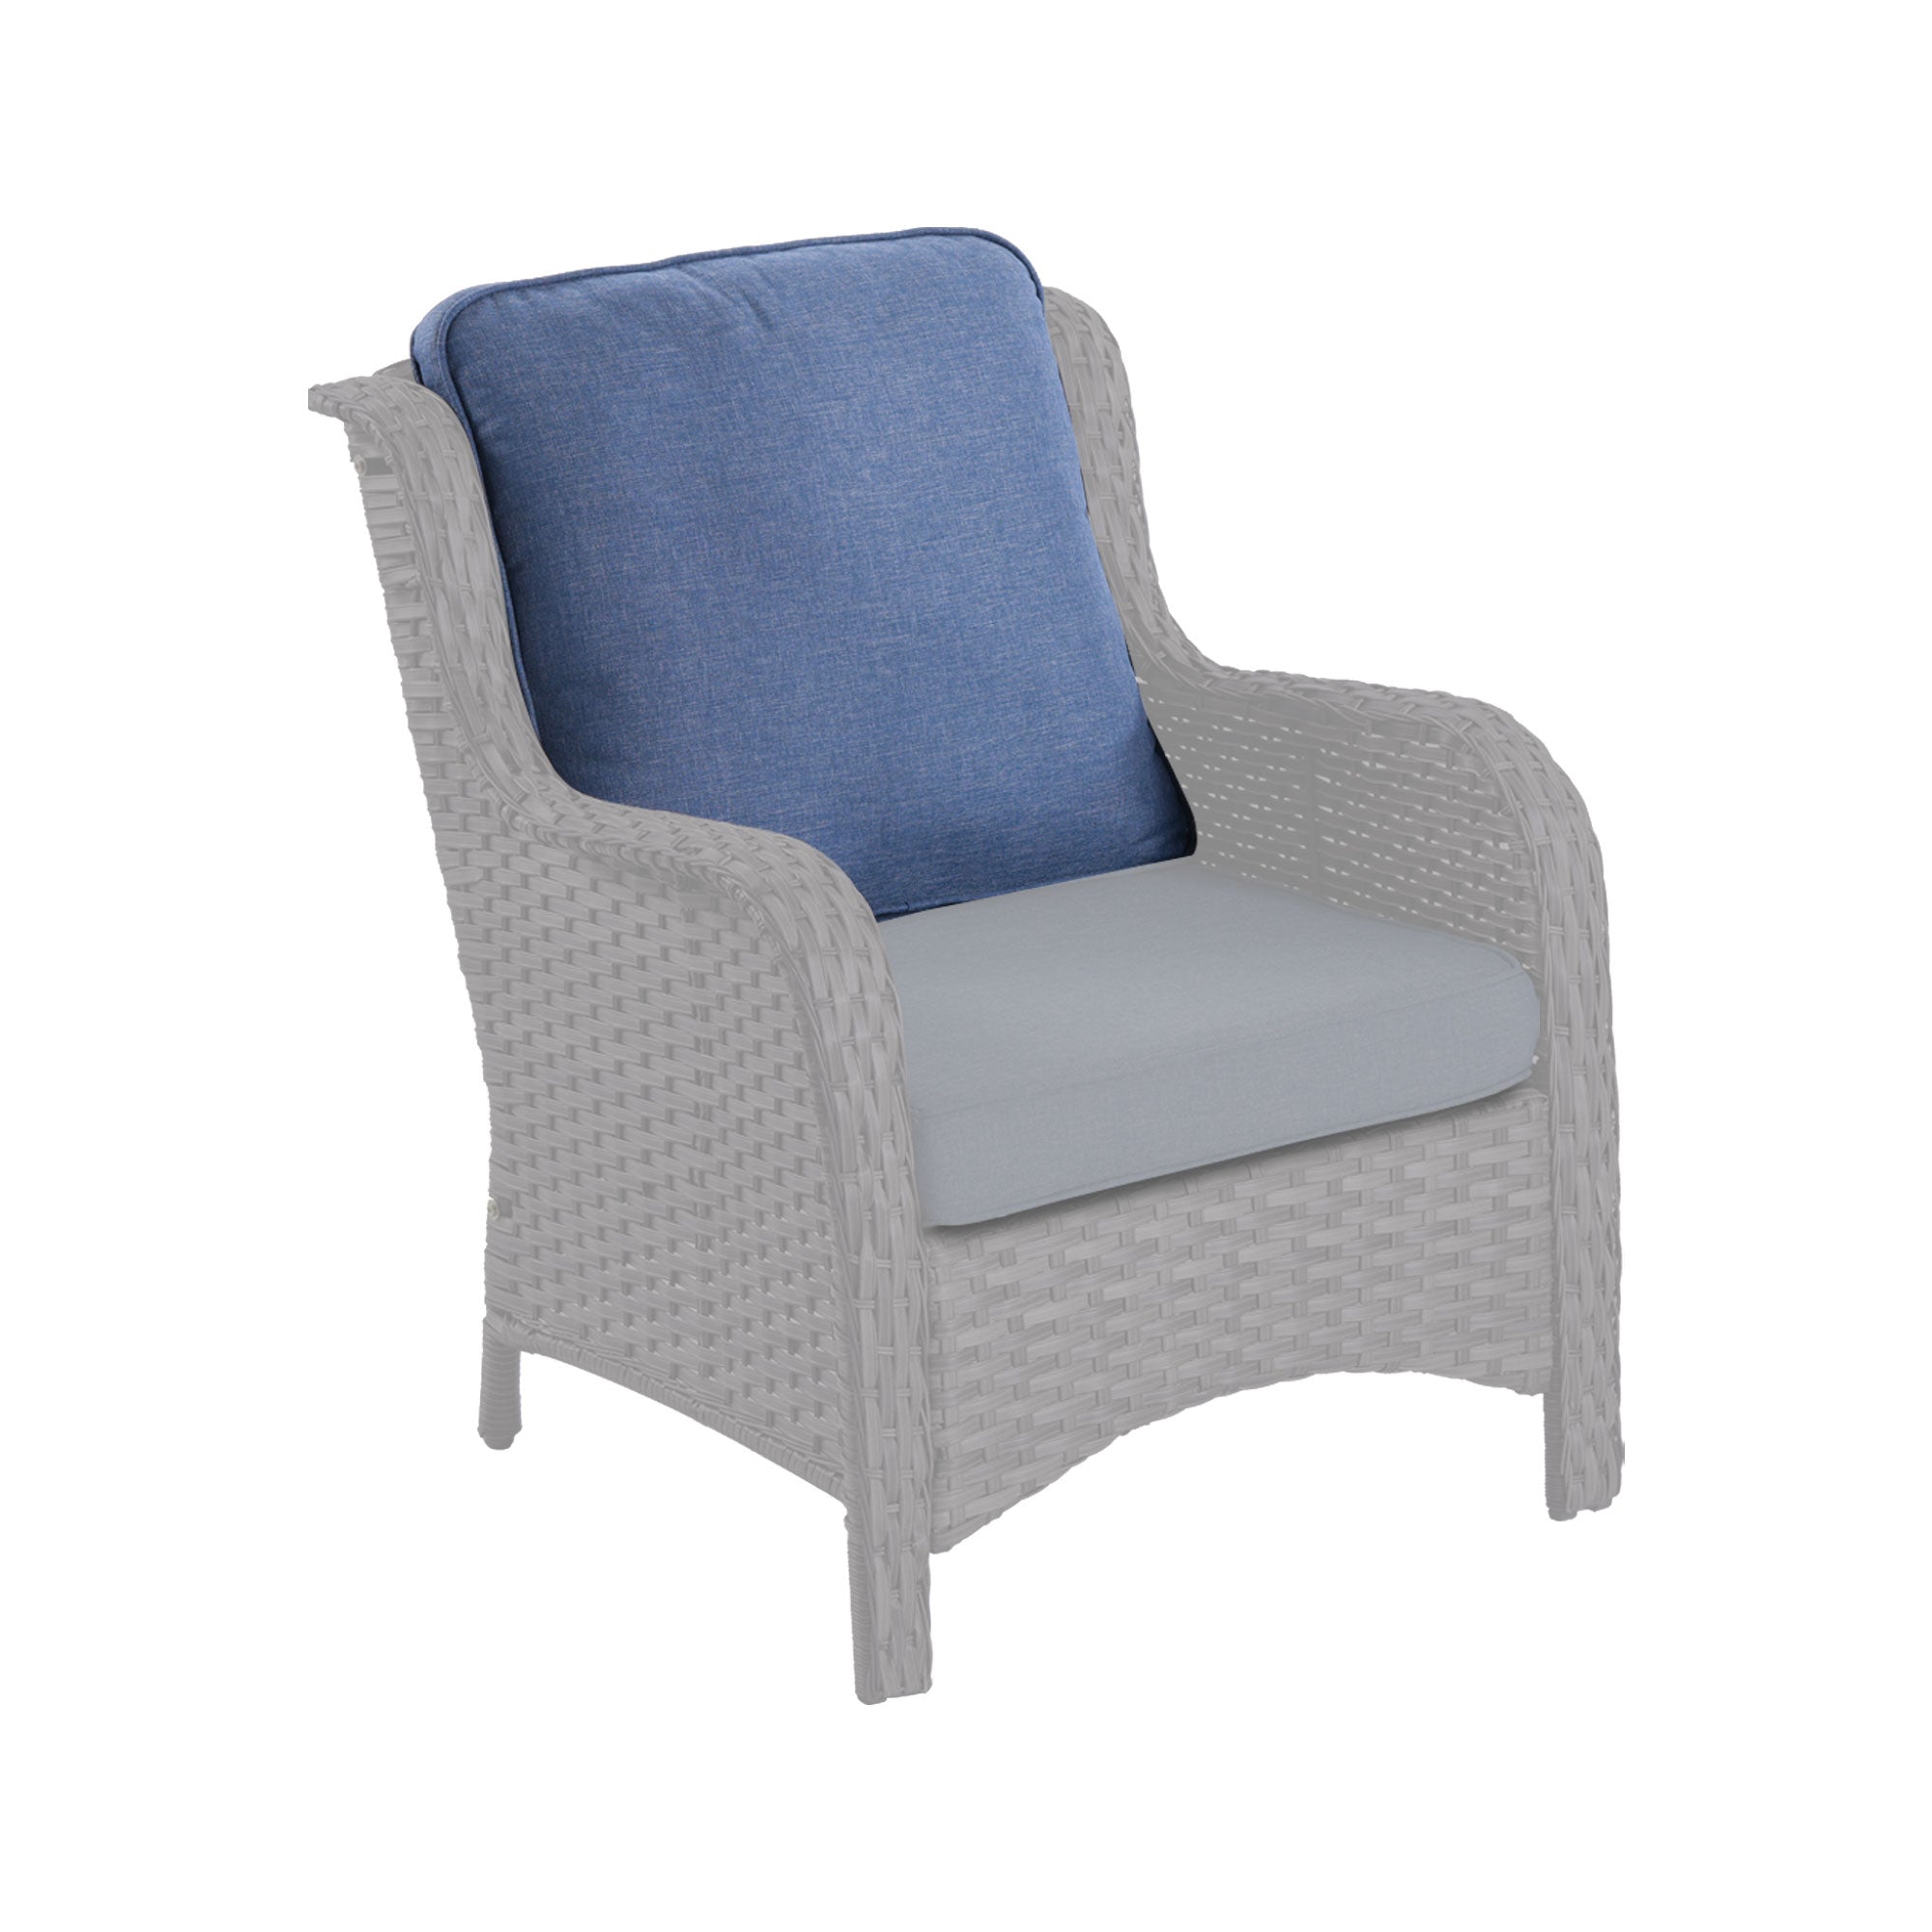 #Color_Denim Blue|Type_Back Cushion